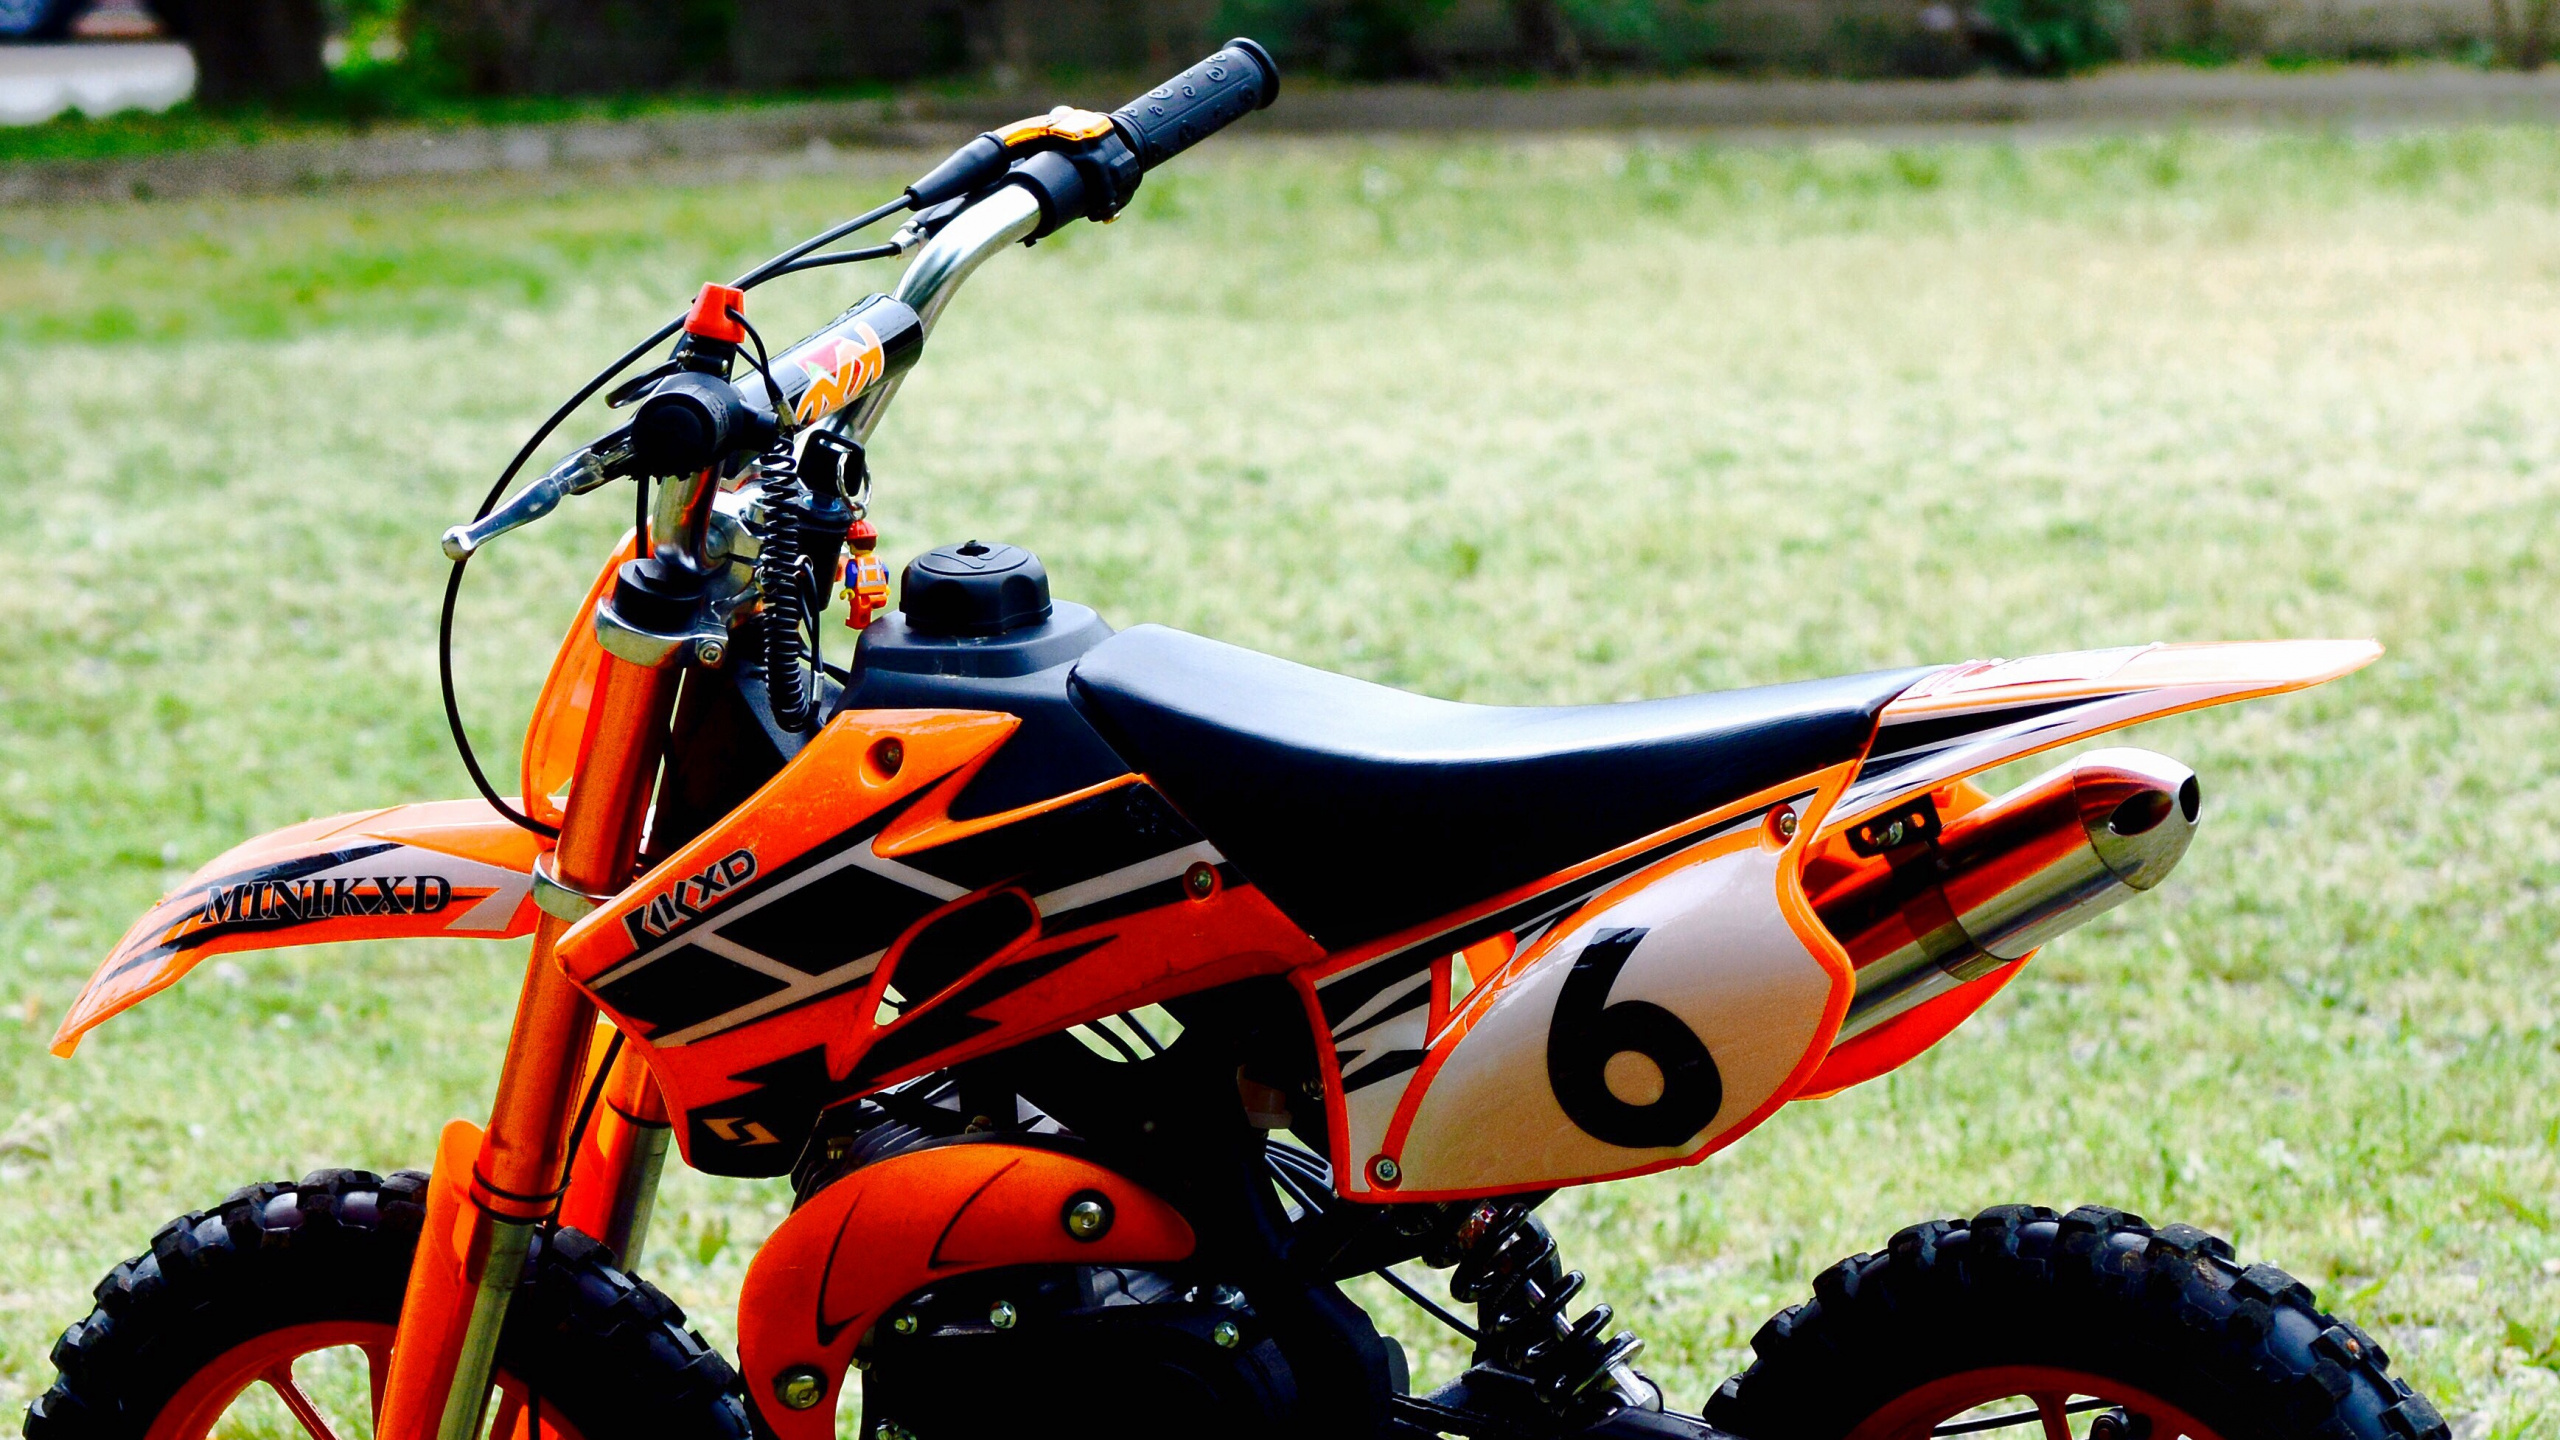 Orange and Black Sports Bike on Green Grass Field During Daytime. Wallpaper in 2560x1440 Resolution